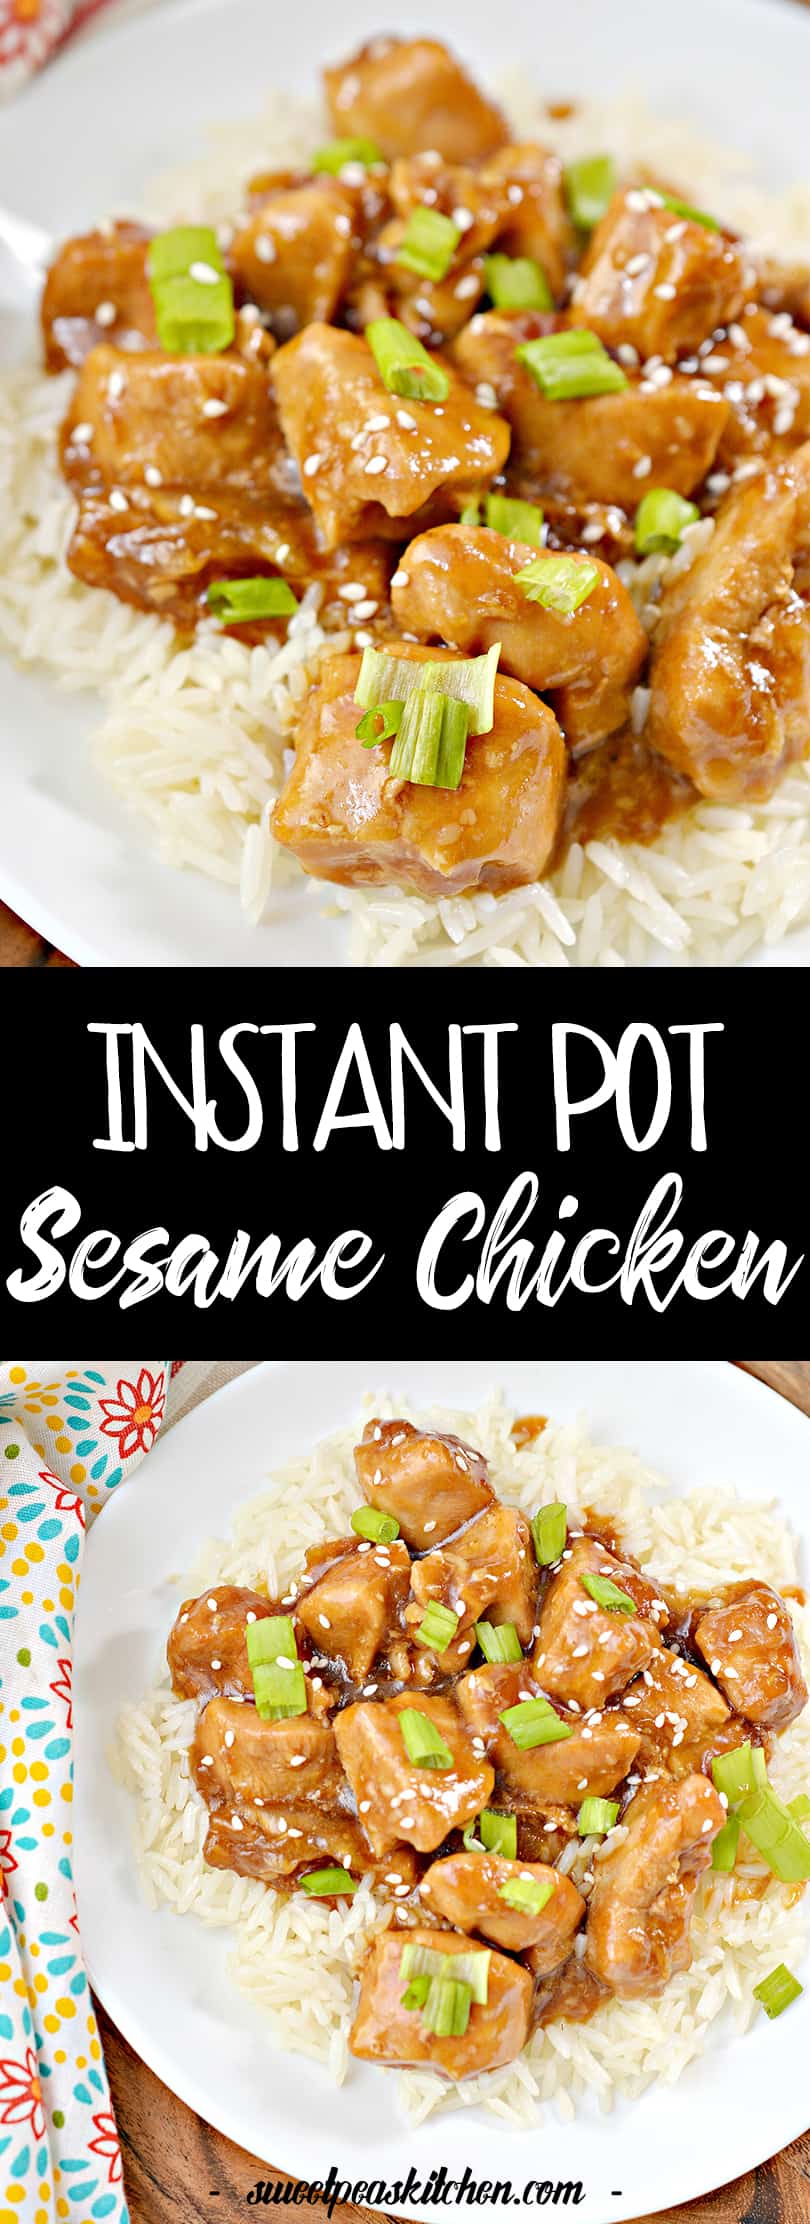 Instant Pot Sesame Chicken Recipe